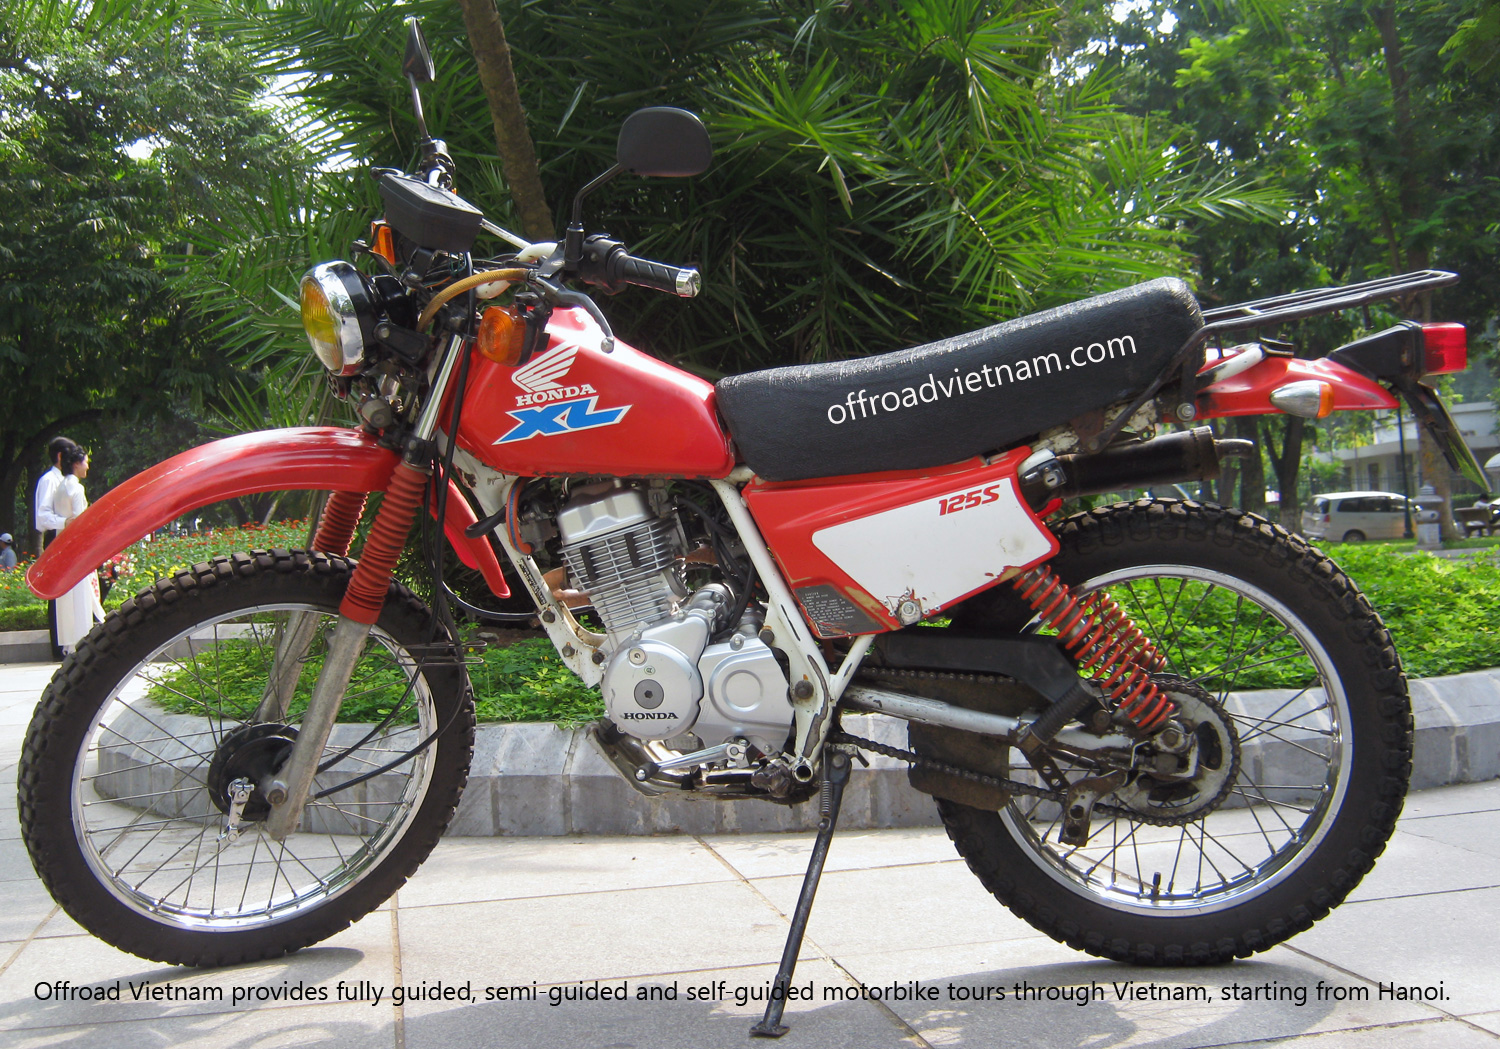 Honda motorbikes for sale vietnam #5